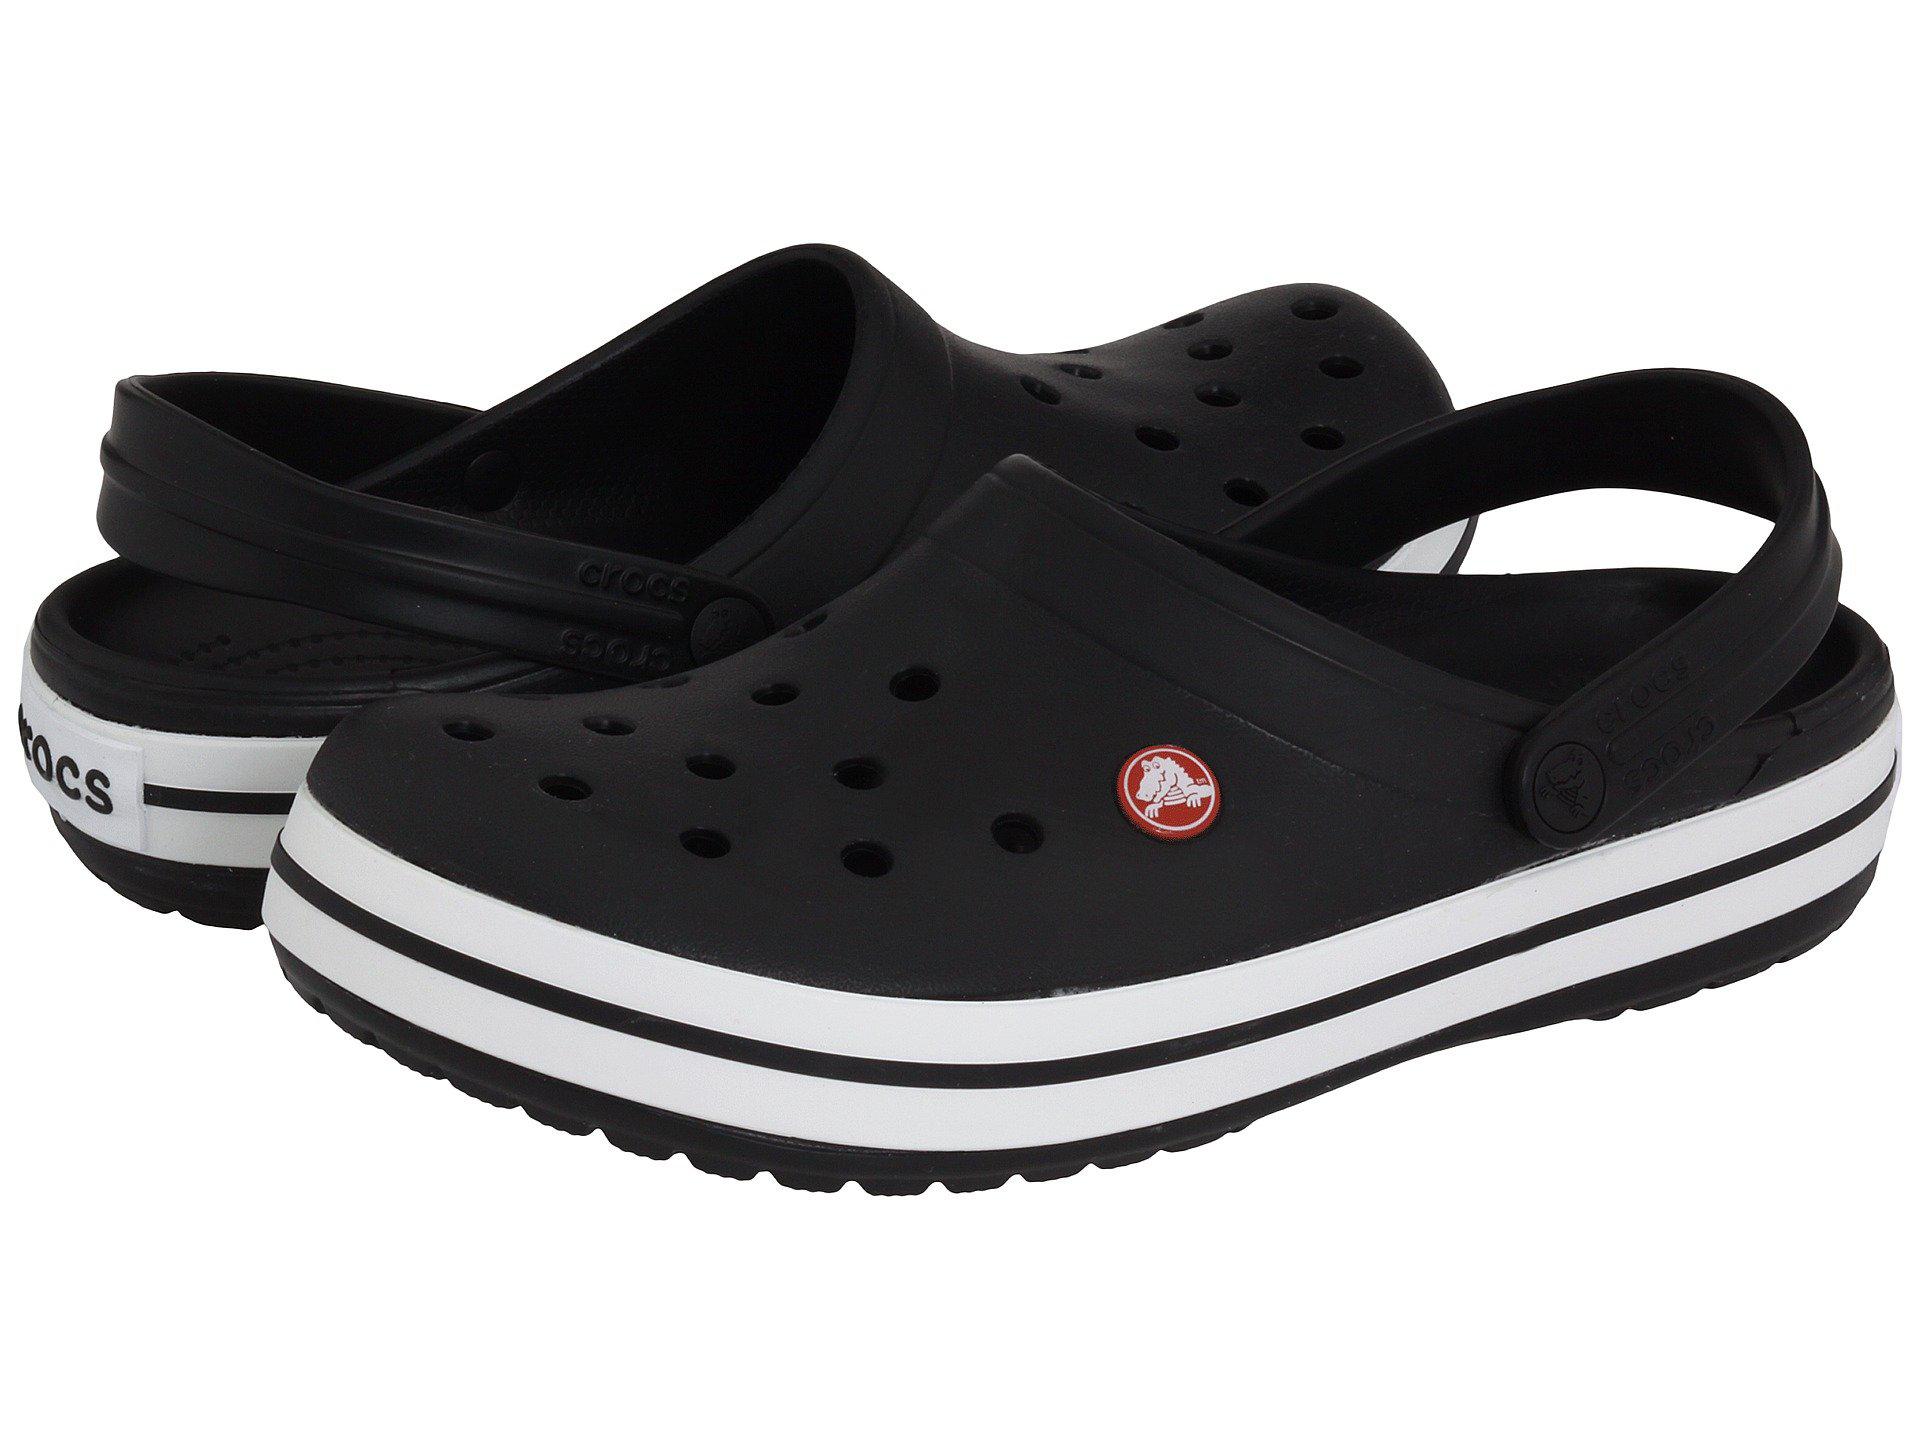 Lyst - Crocs™ Crocband Clog (charcoal/ocean) Clog Shoes in Black for Men